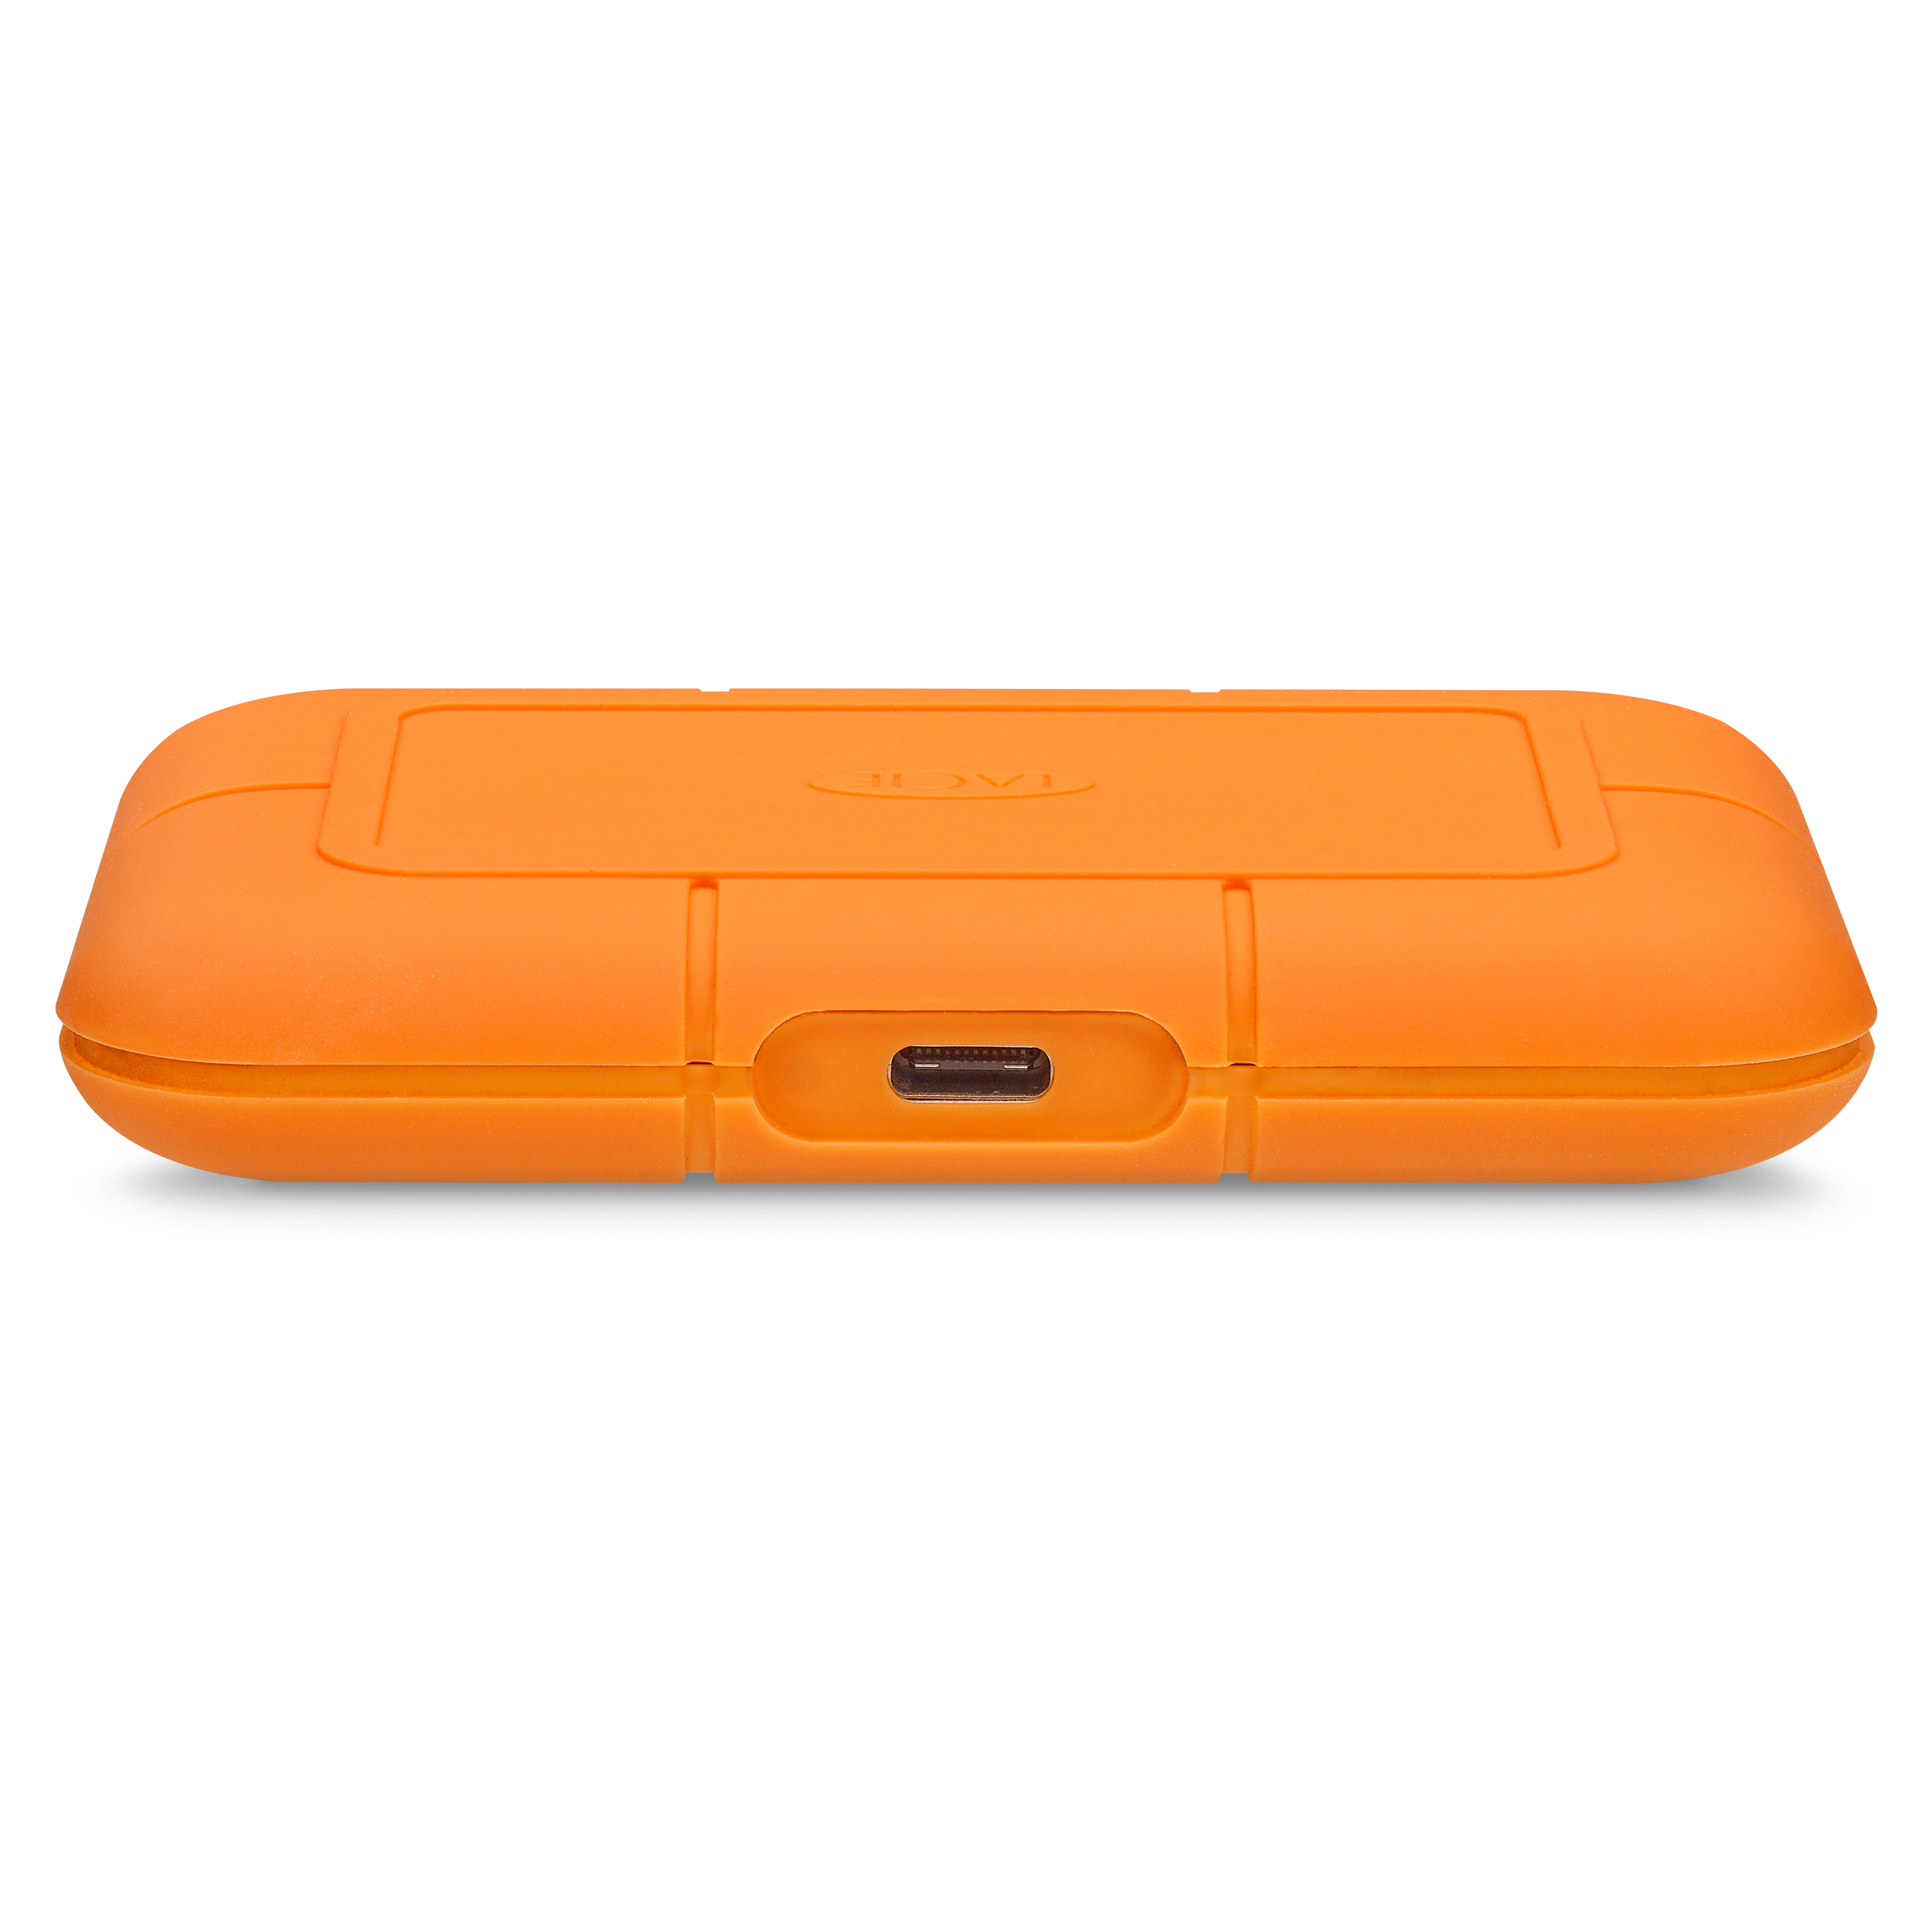 SSD, extern, 500 Orange Festplatte, Rugged LACIE SSD GB